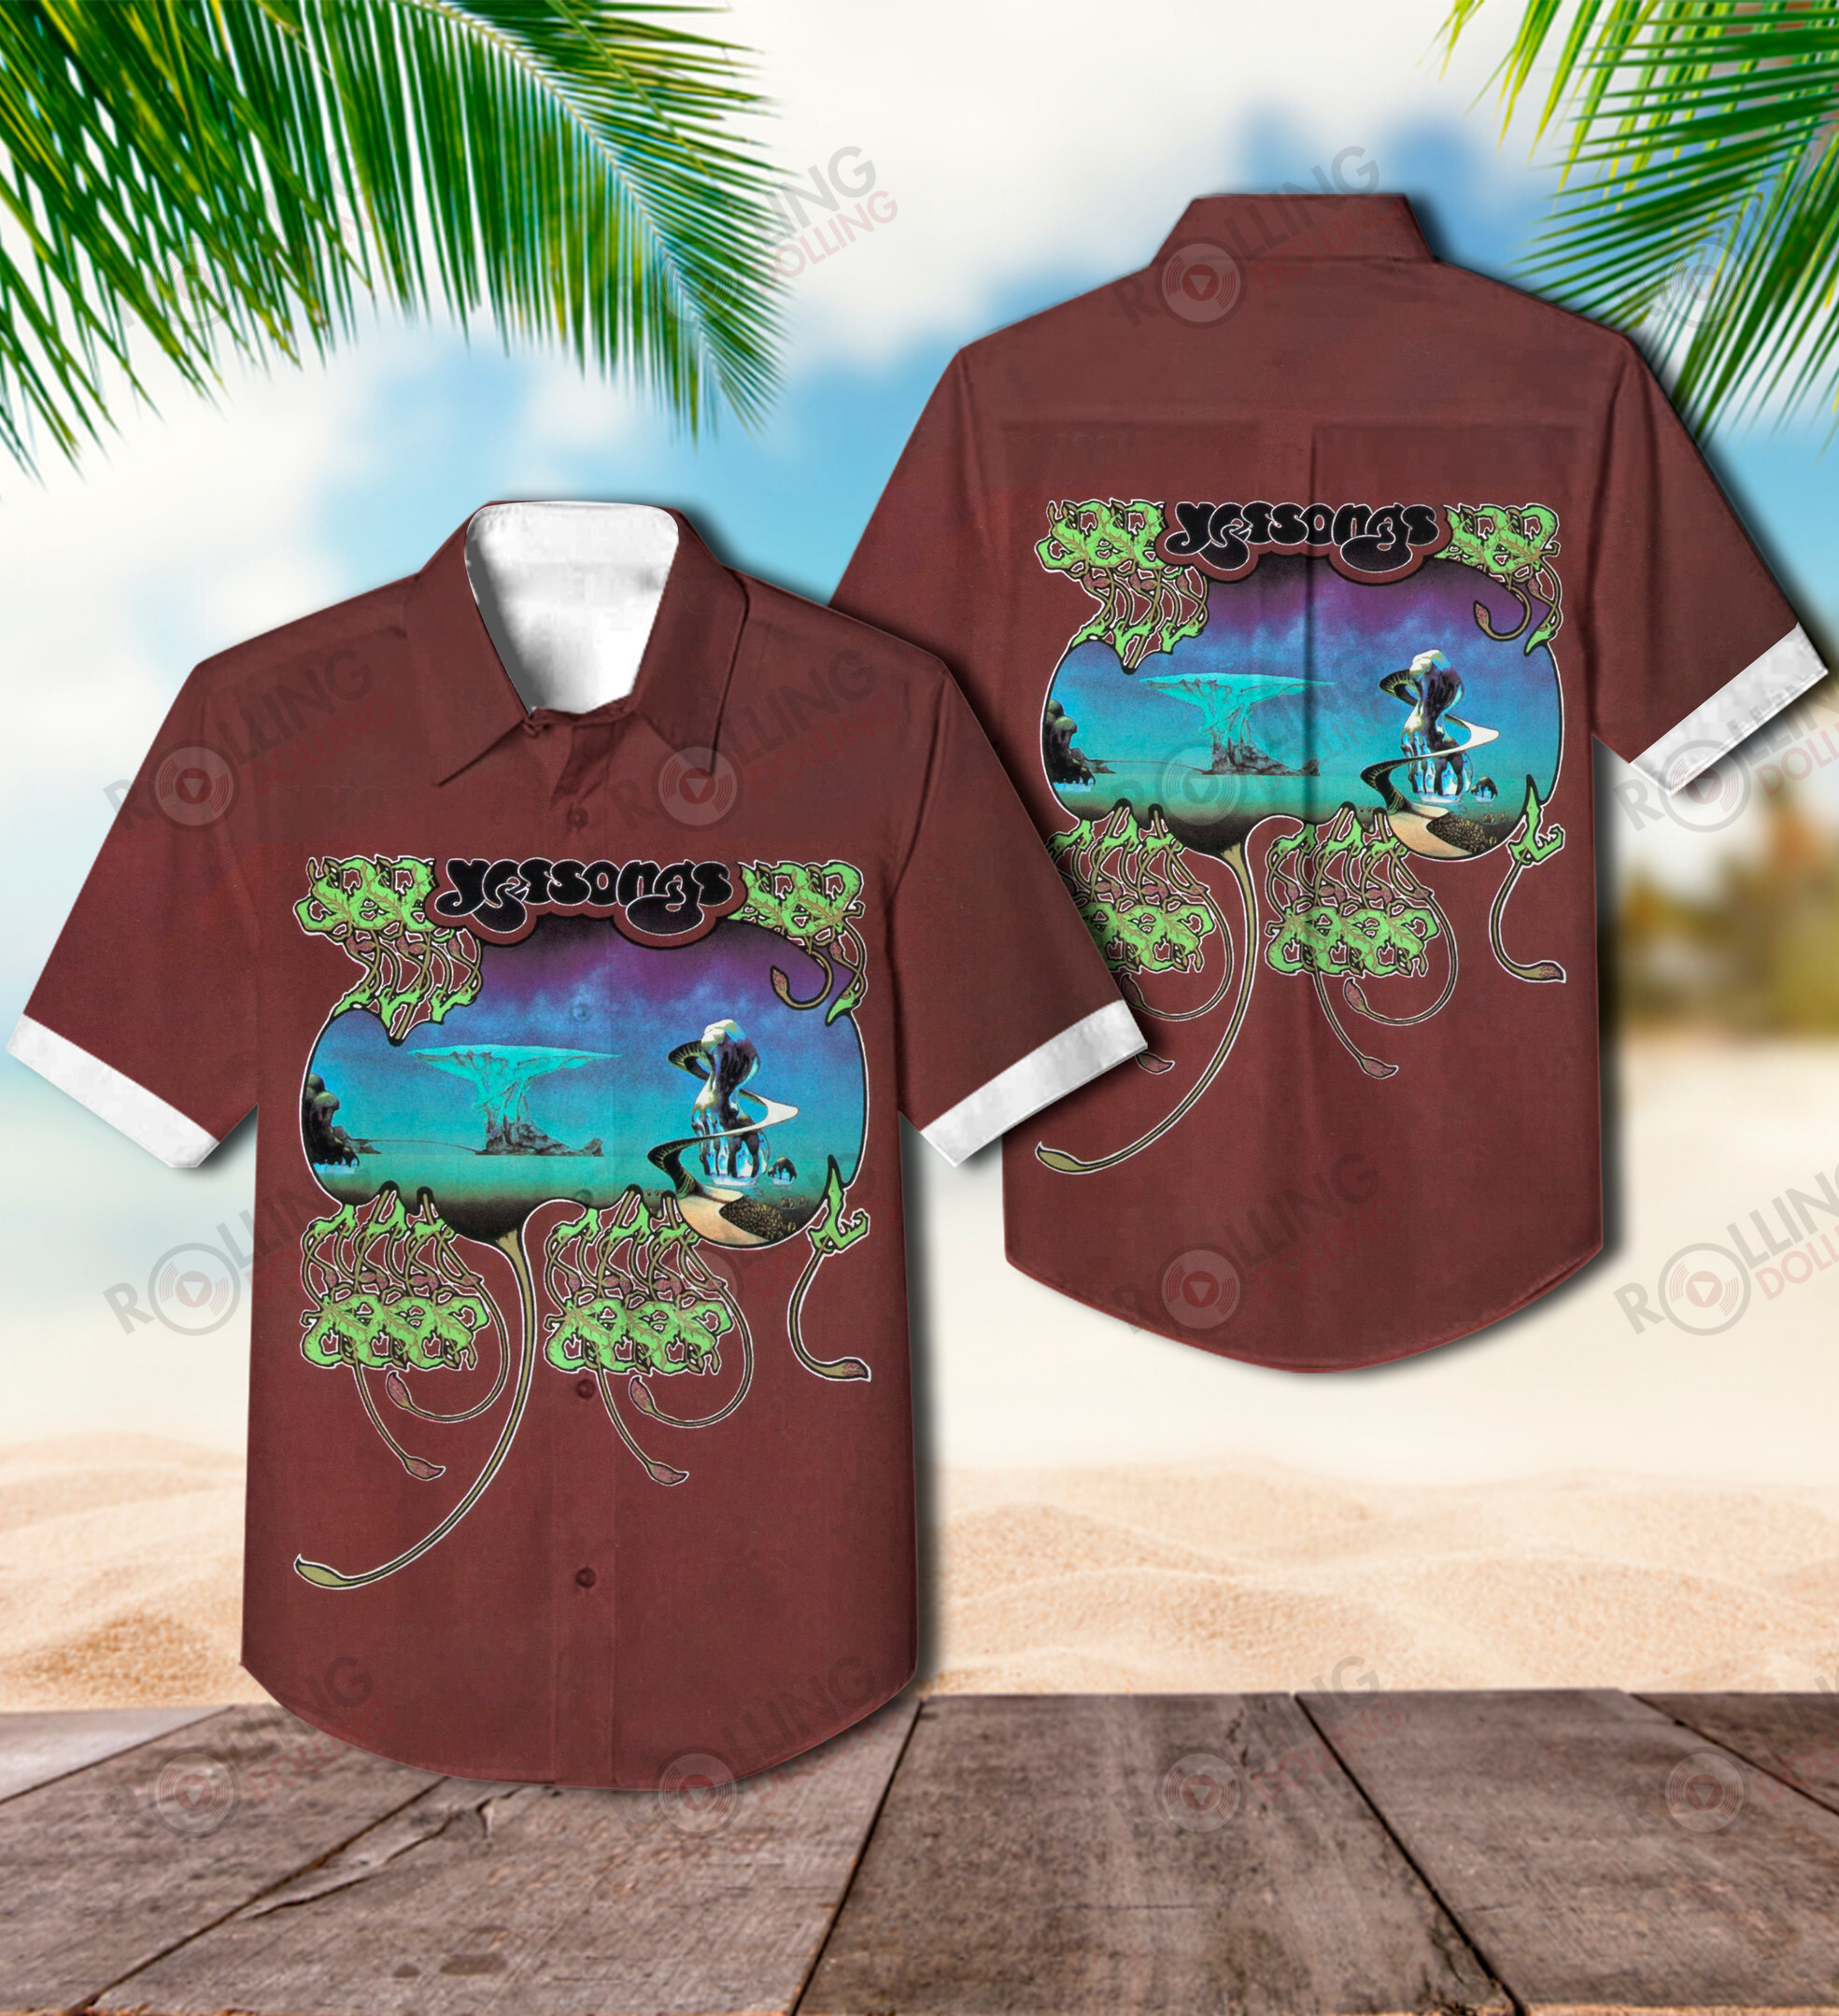 Regardless of their style, you will feel comfortable wearing Hawaiian Shirt 159